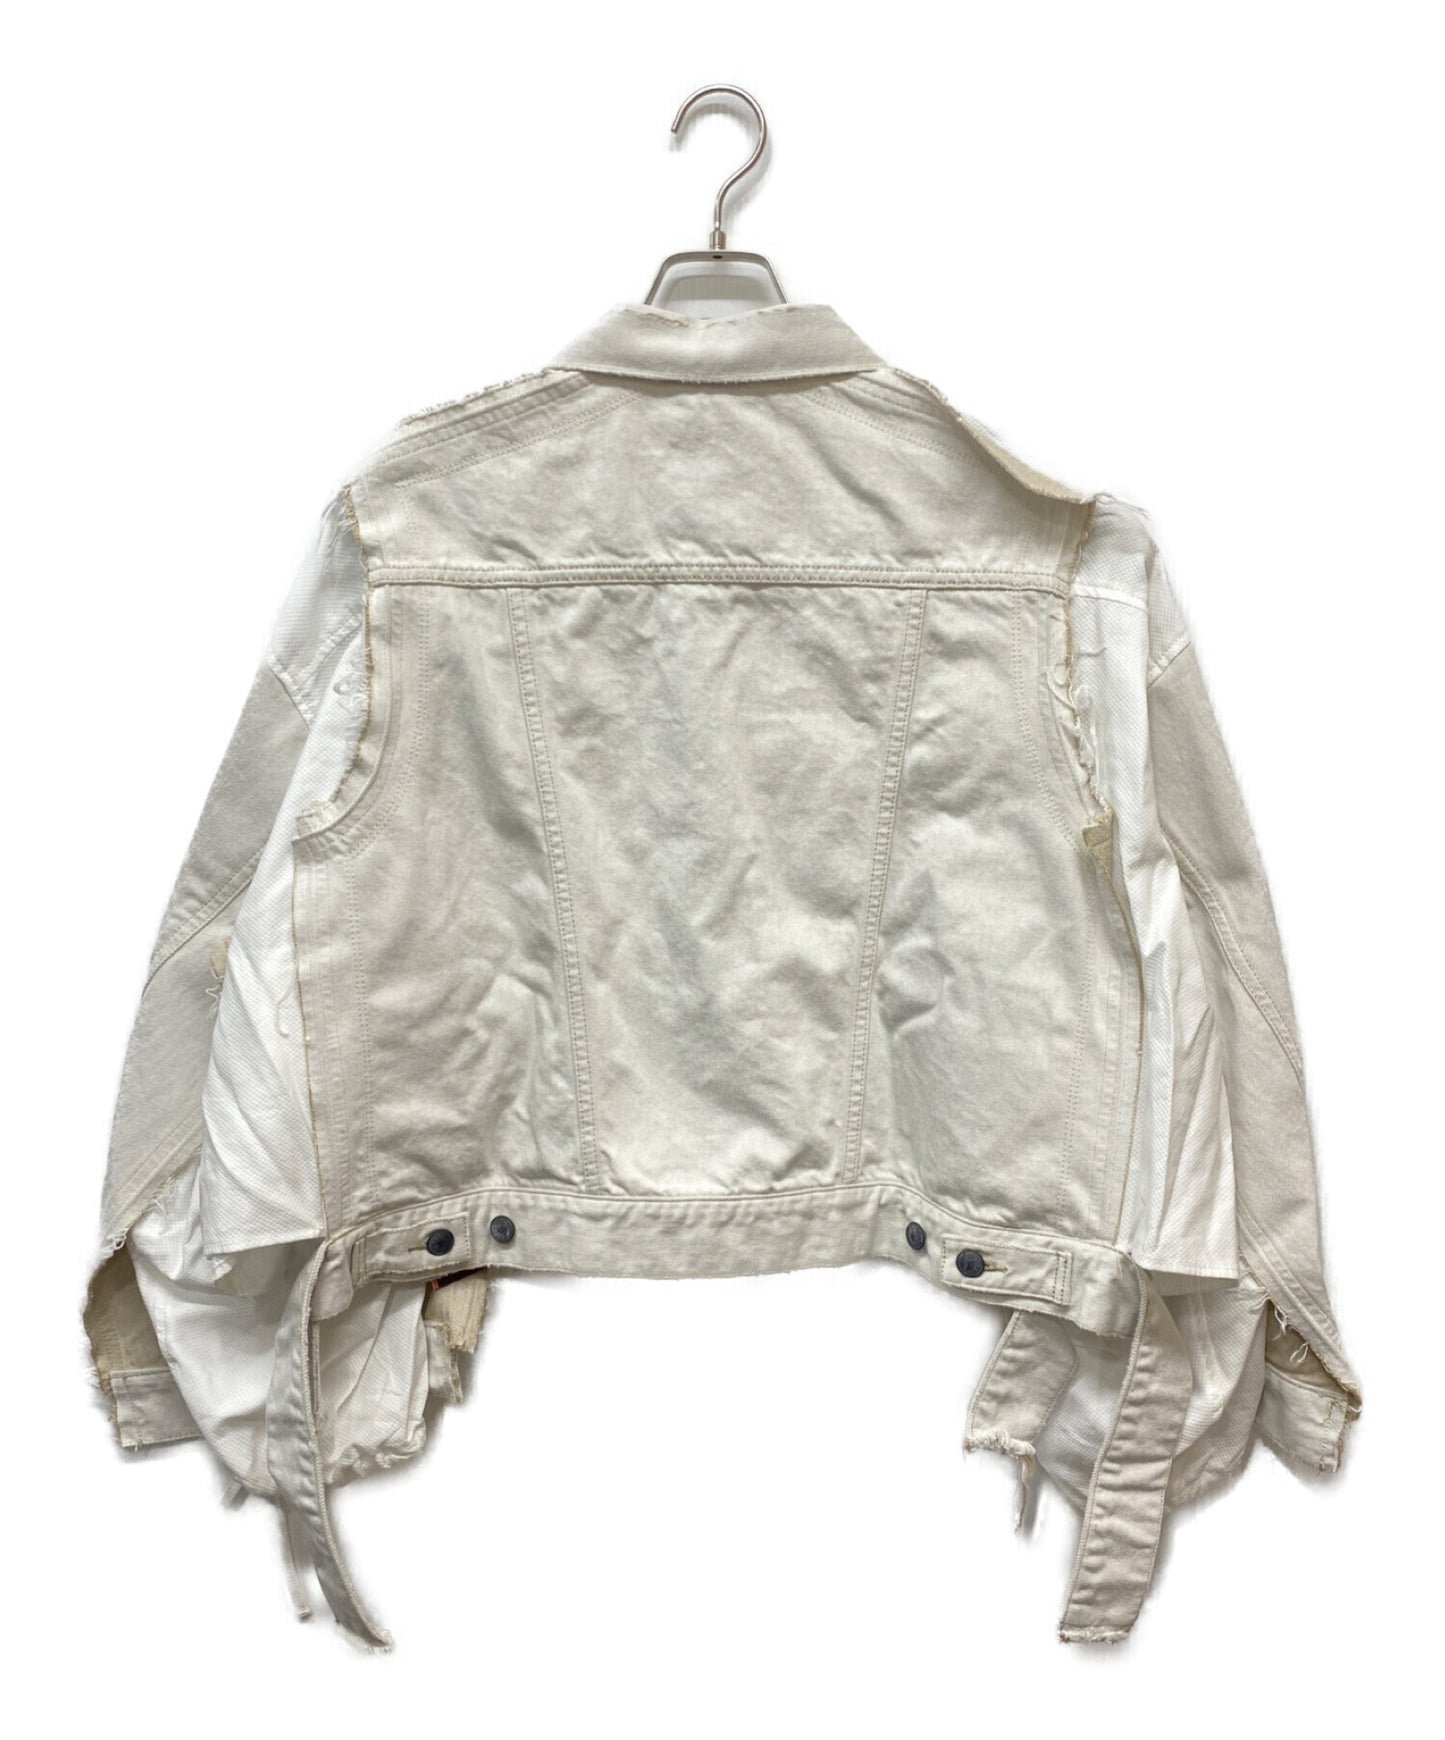 [Pre-owned] Maison MIHARA YASUHIRO Resize Shirt Combined Denim Jacket B08BL171